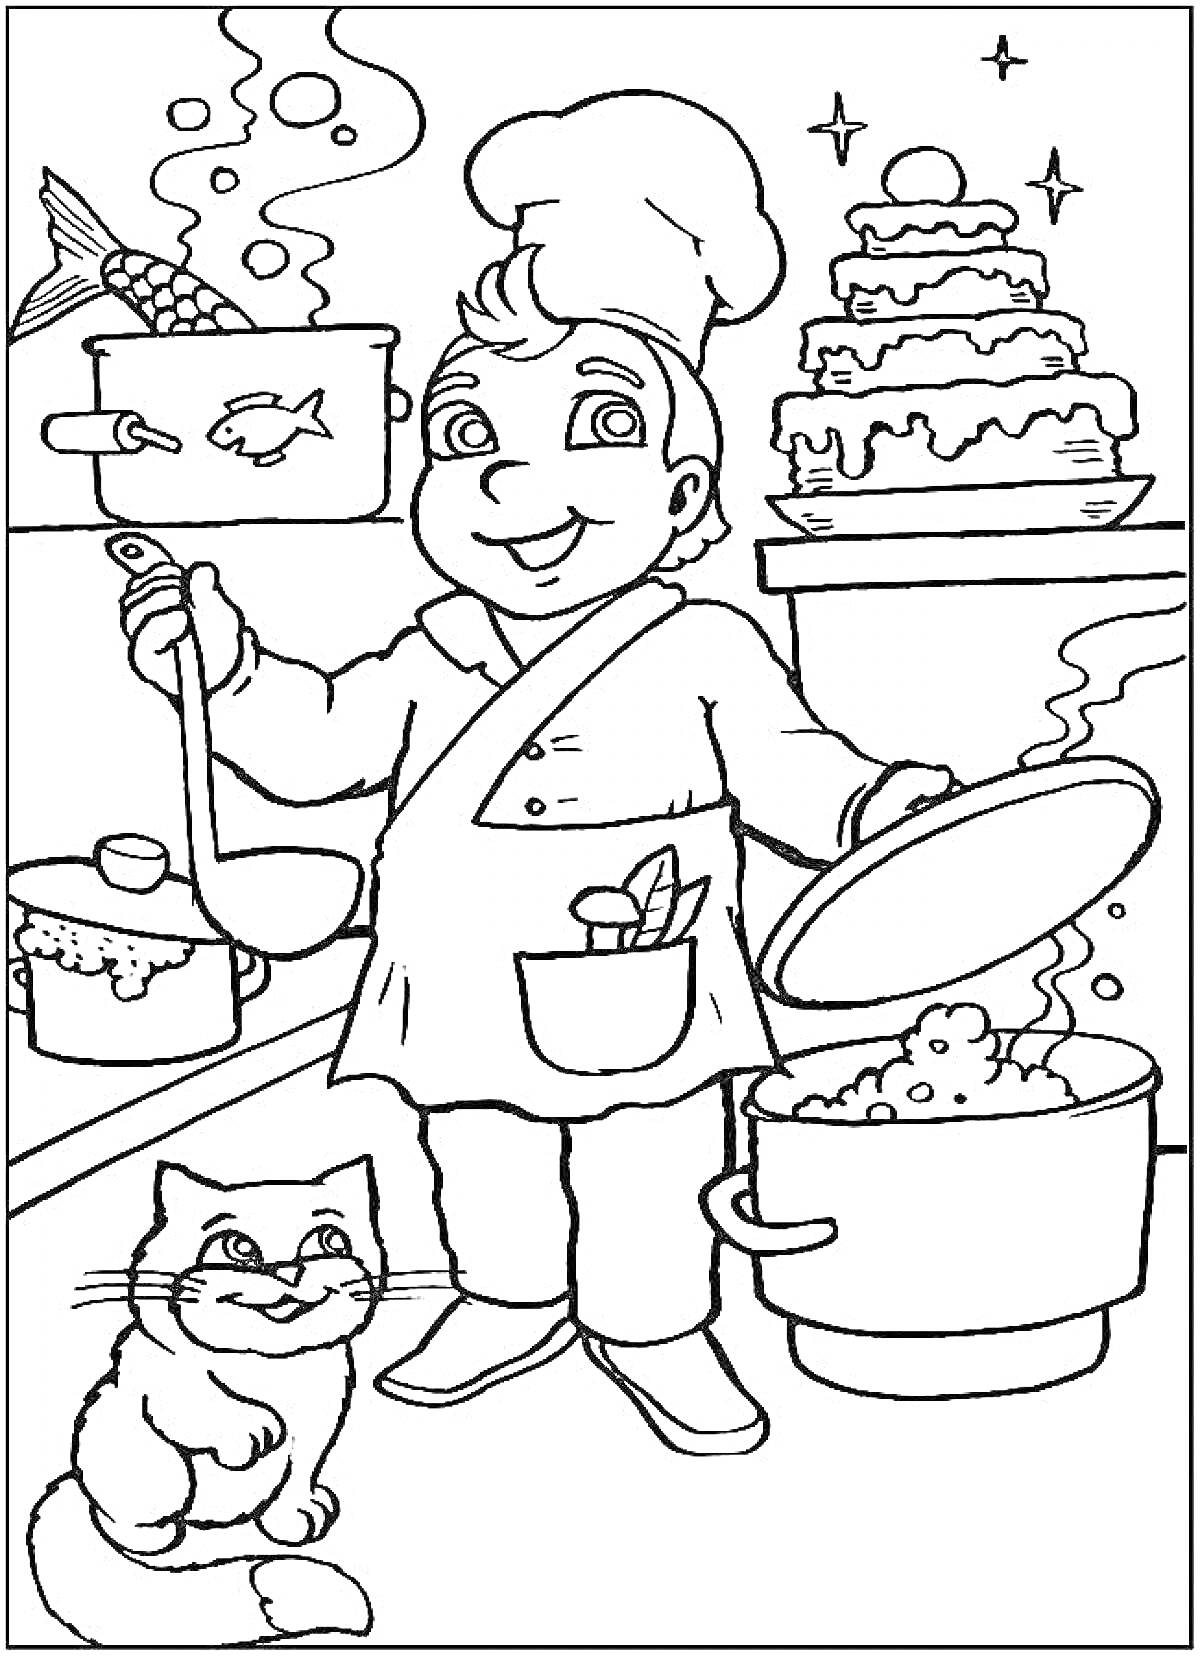 Раскраска Повара на кухне, рядом с ними кот, кастрюли с едой и торт на фоне.